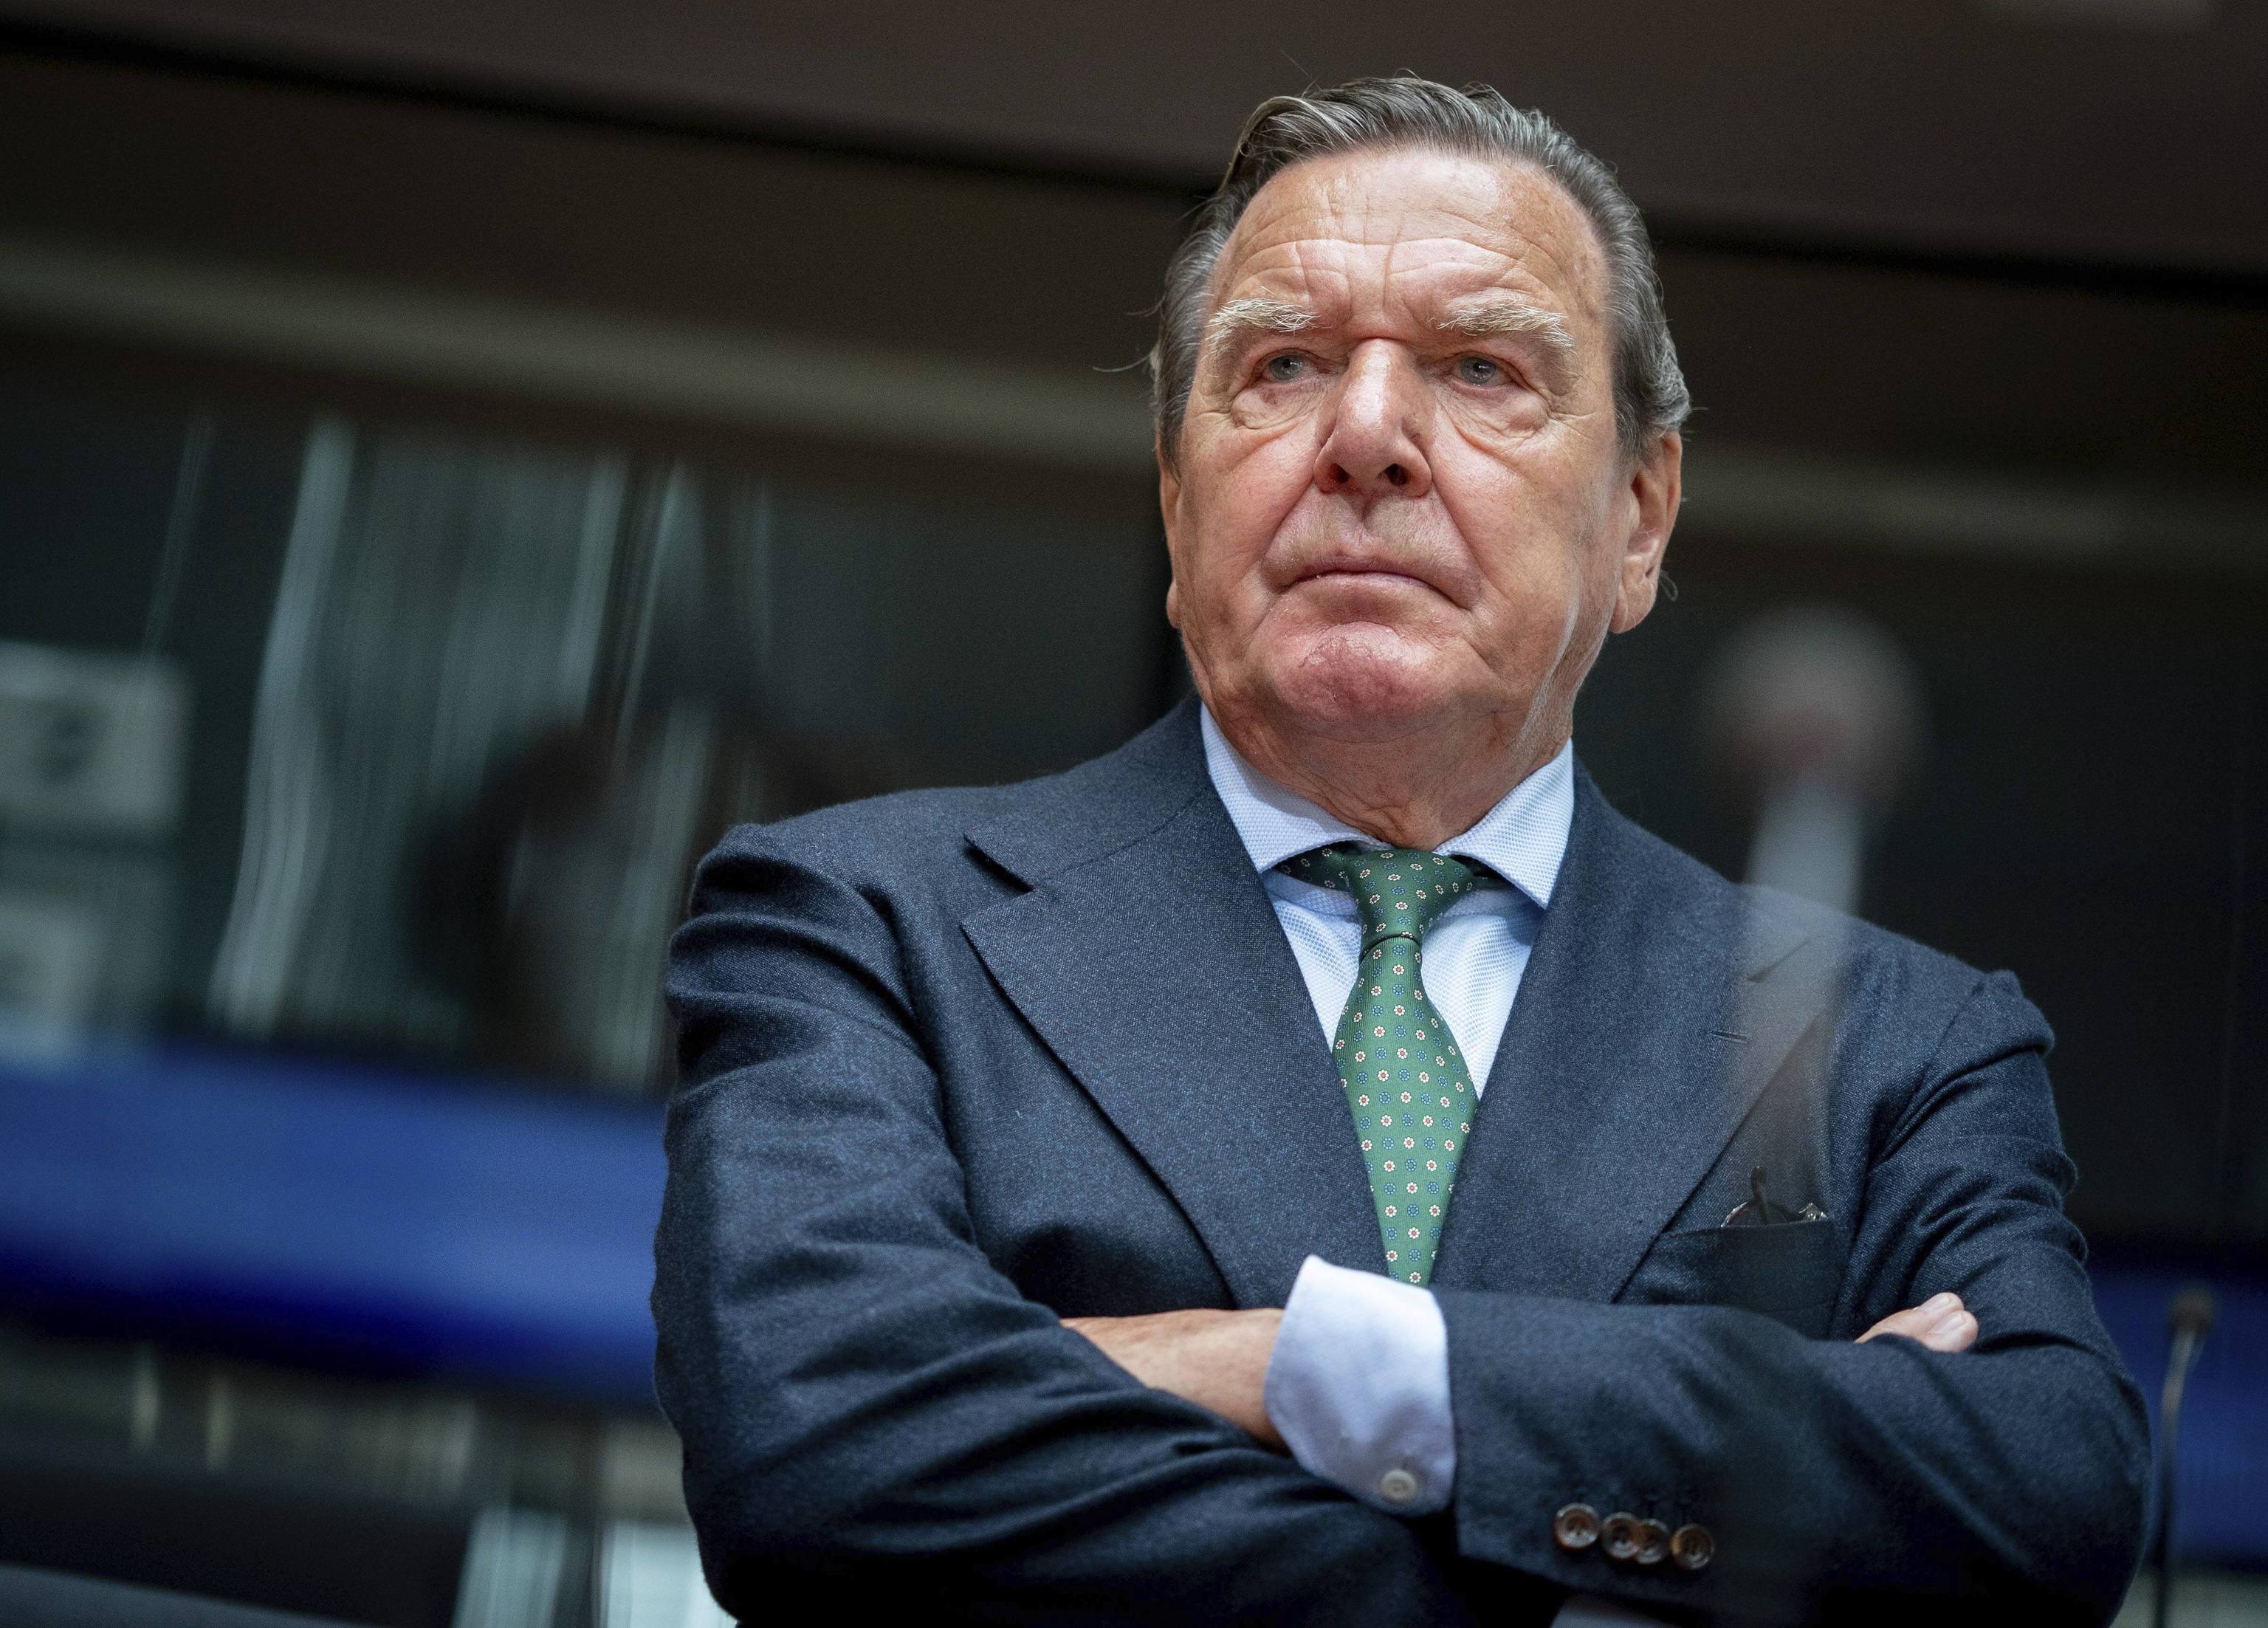 El ex canciller Gerhard Schröder abandona la petrolera rusa Rosneft para no ser sancionado